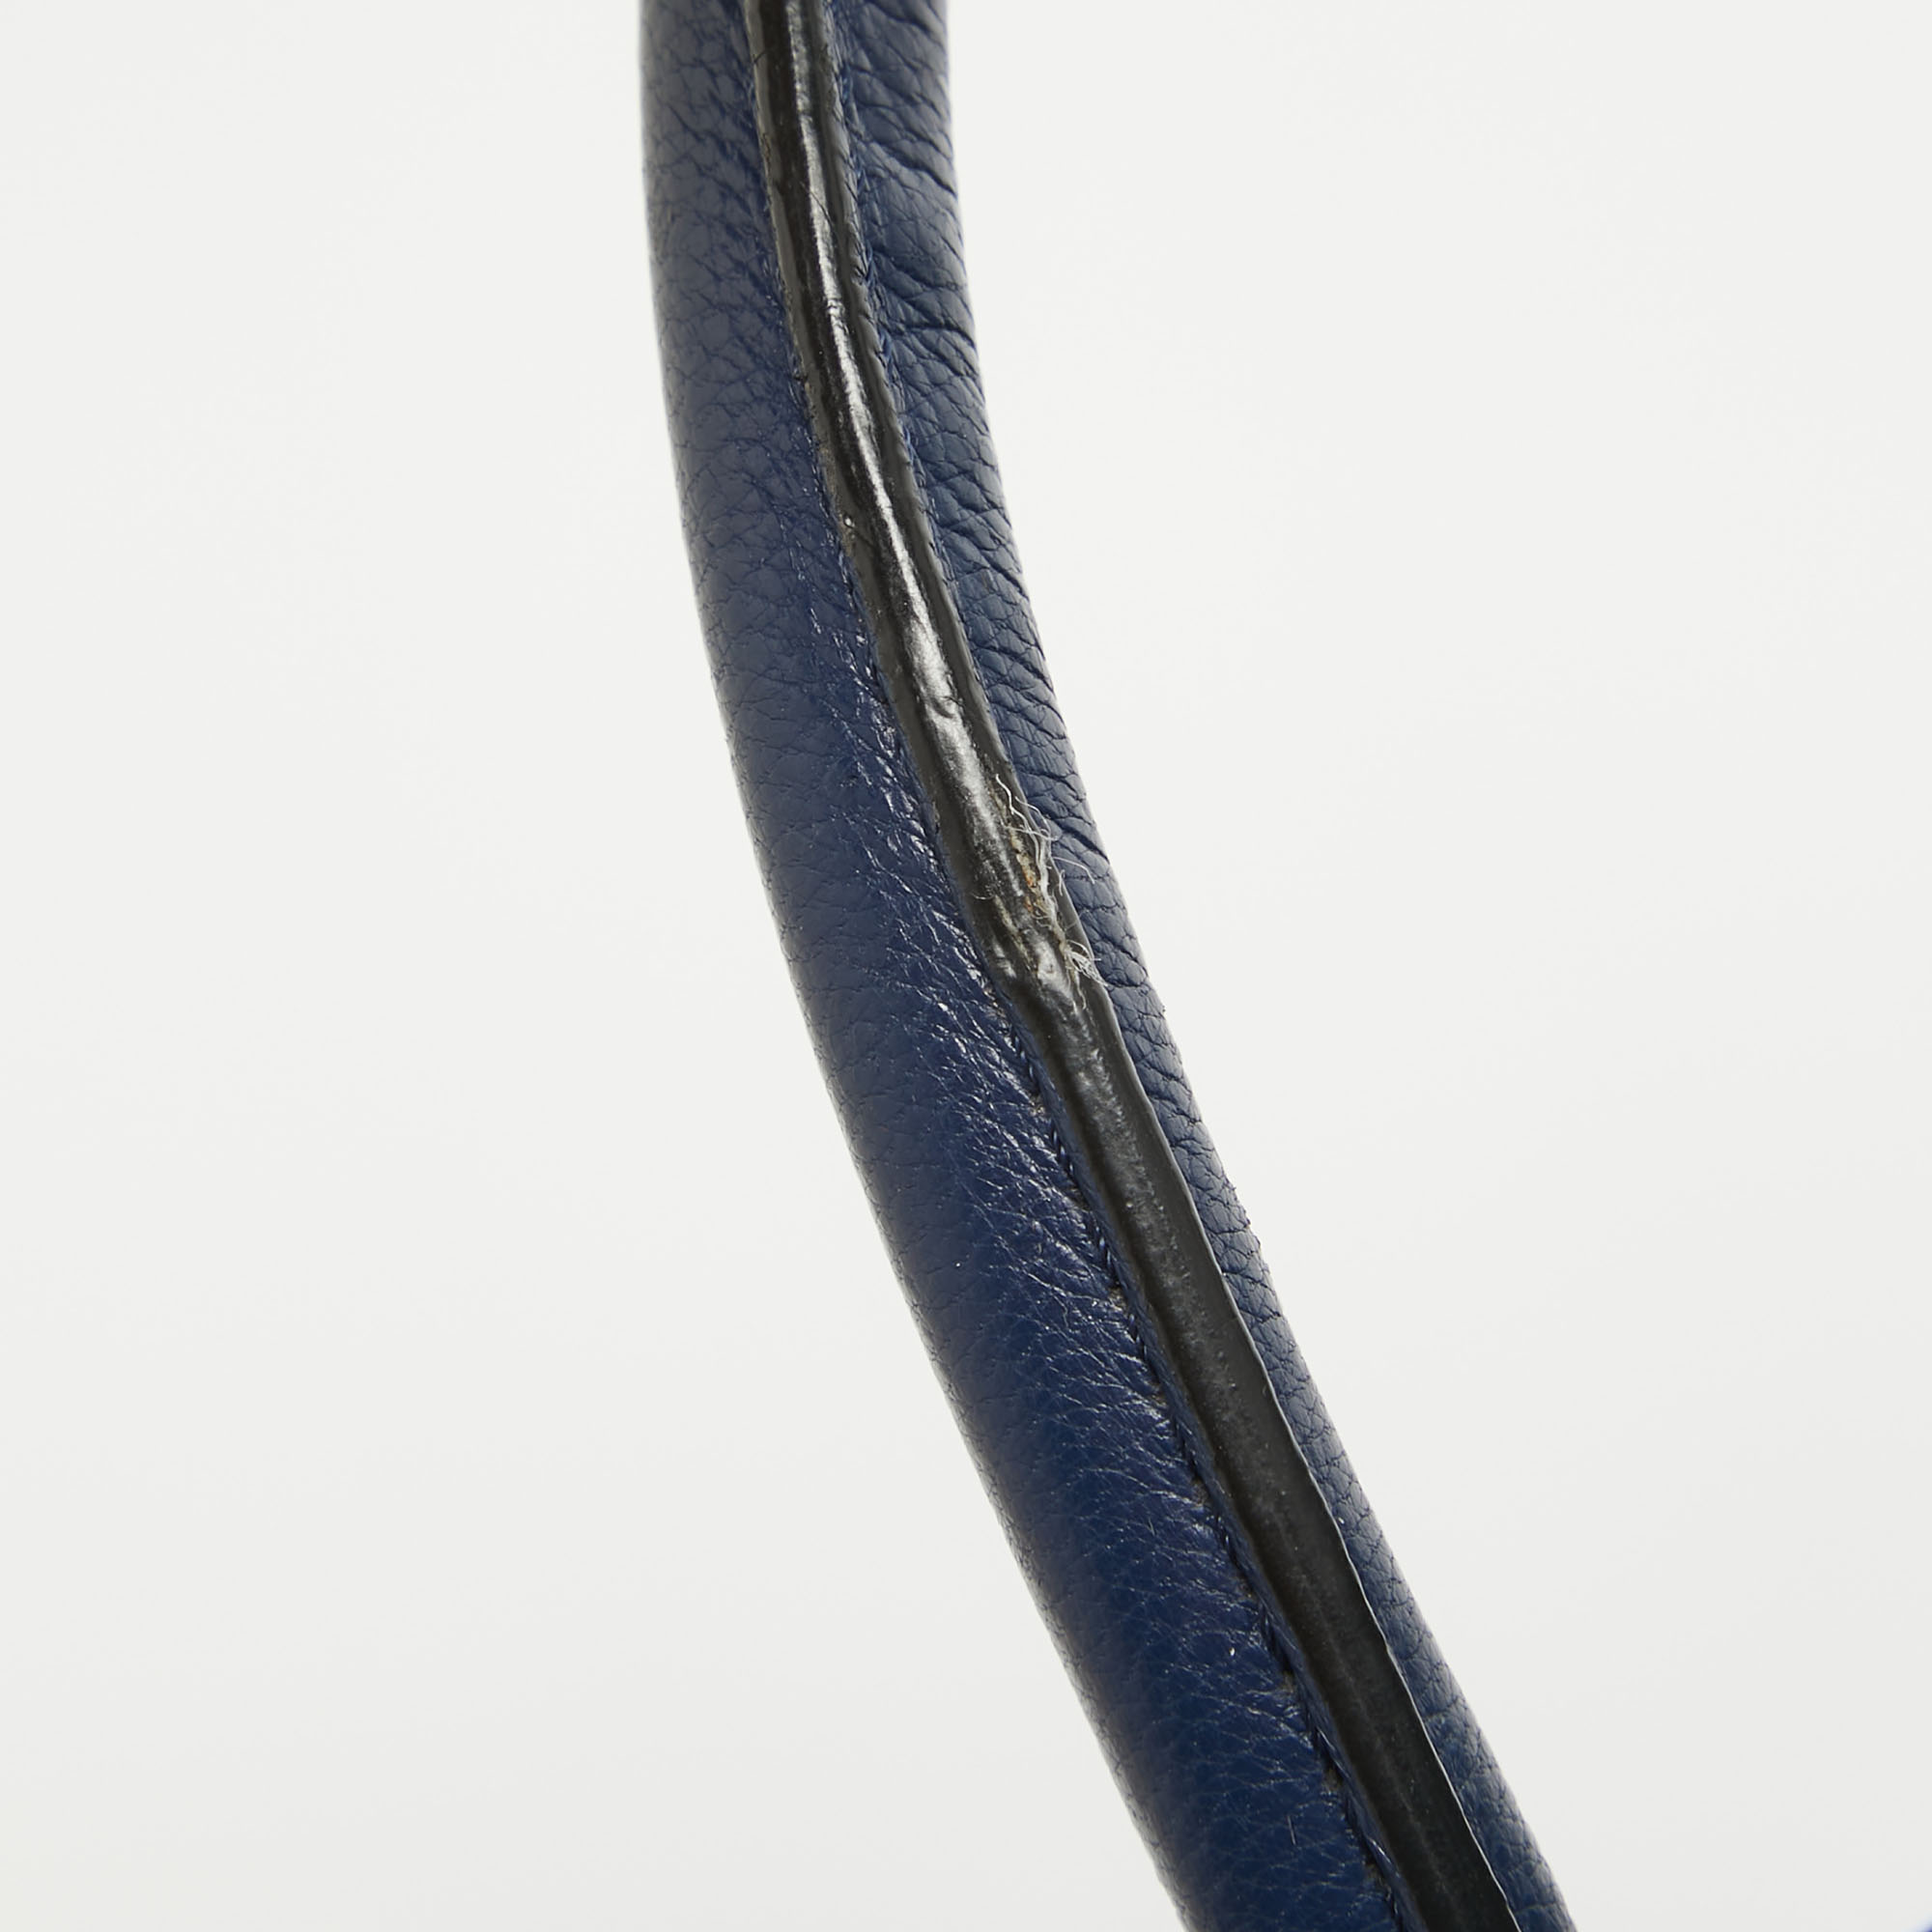 Givenchy Navy Blue Leather Medium Antigona Satchel